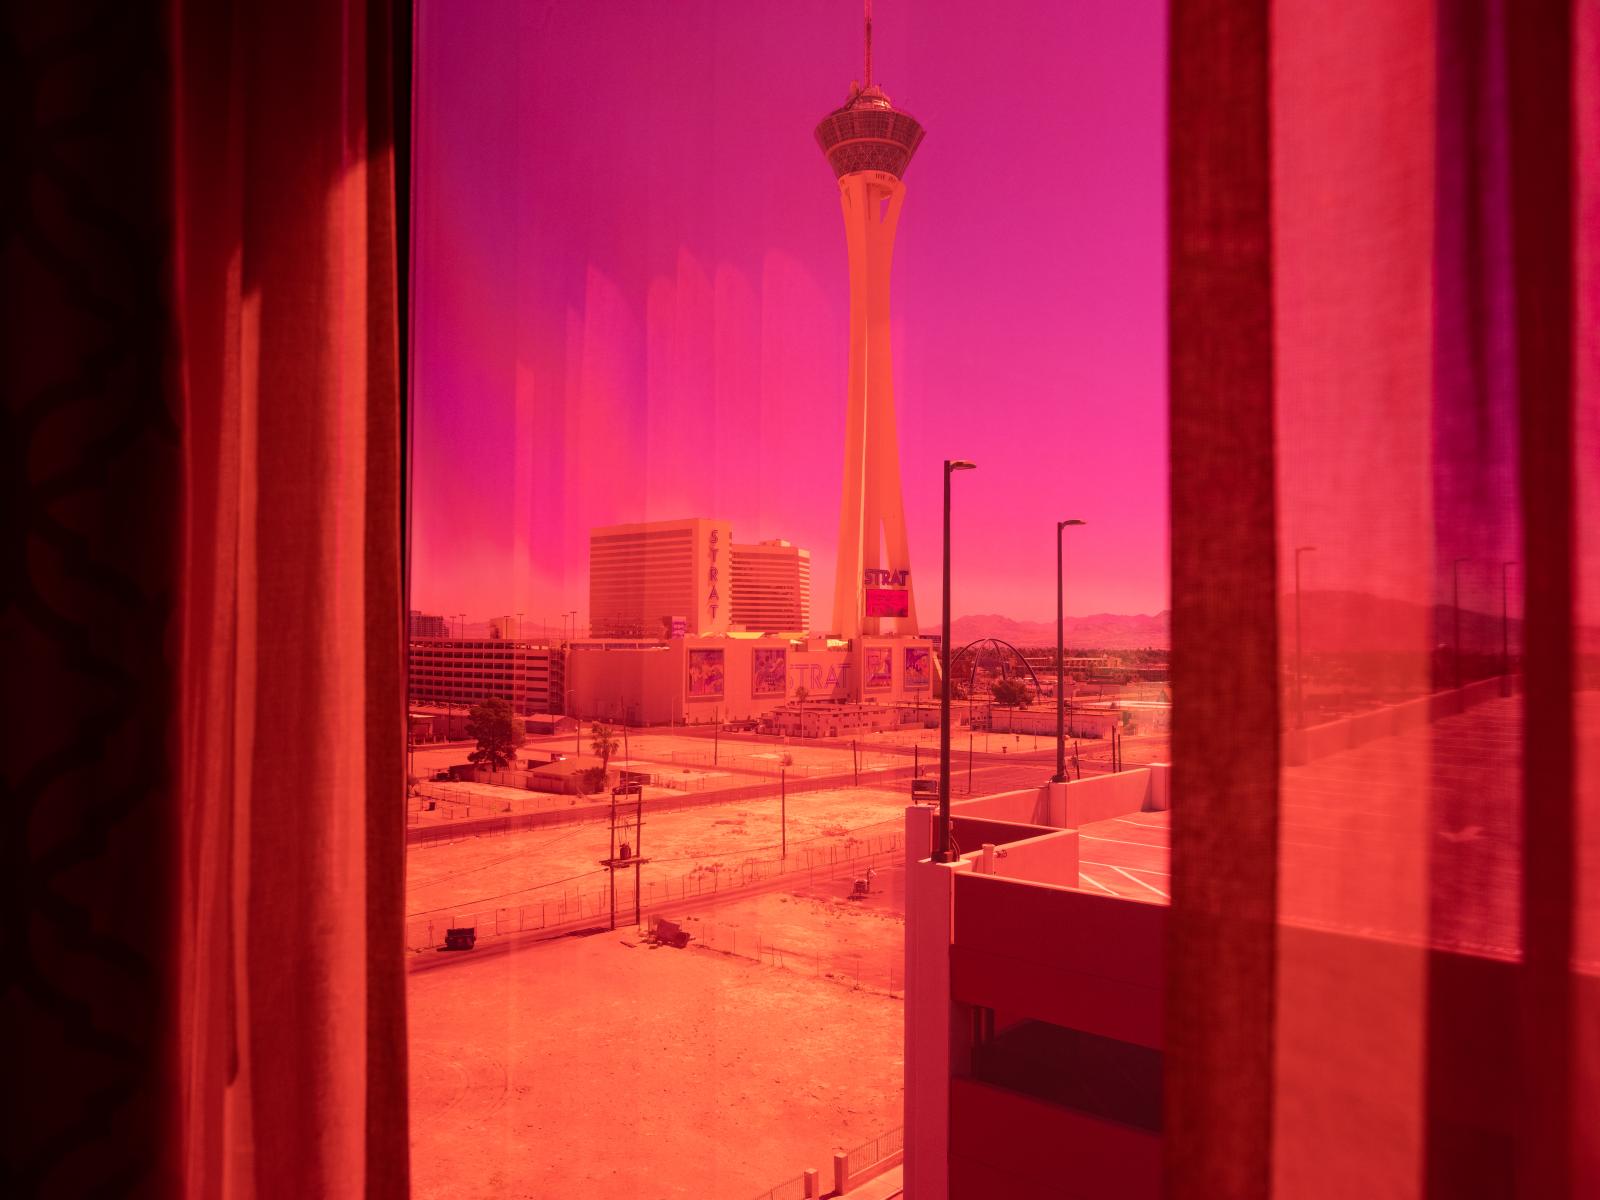 Hotel View Vegas | Buy this image